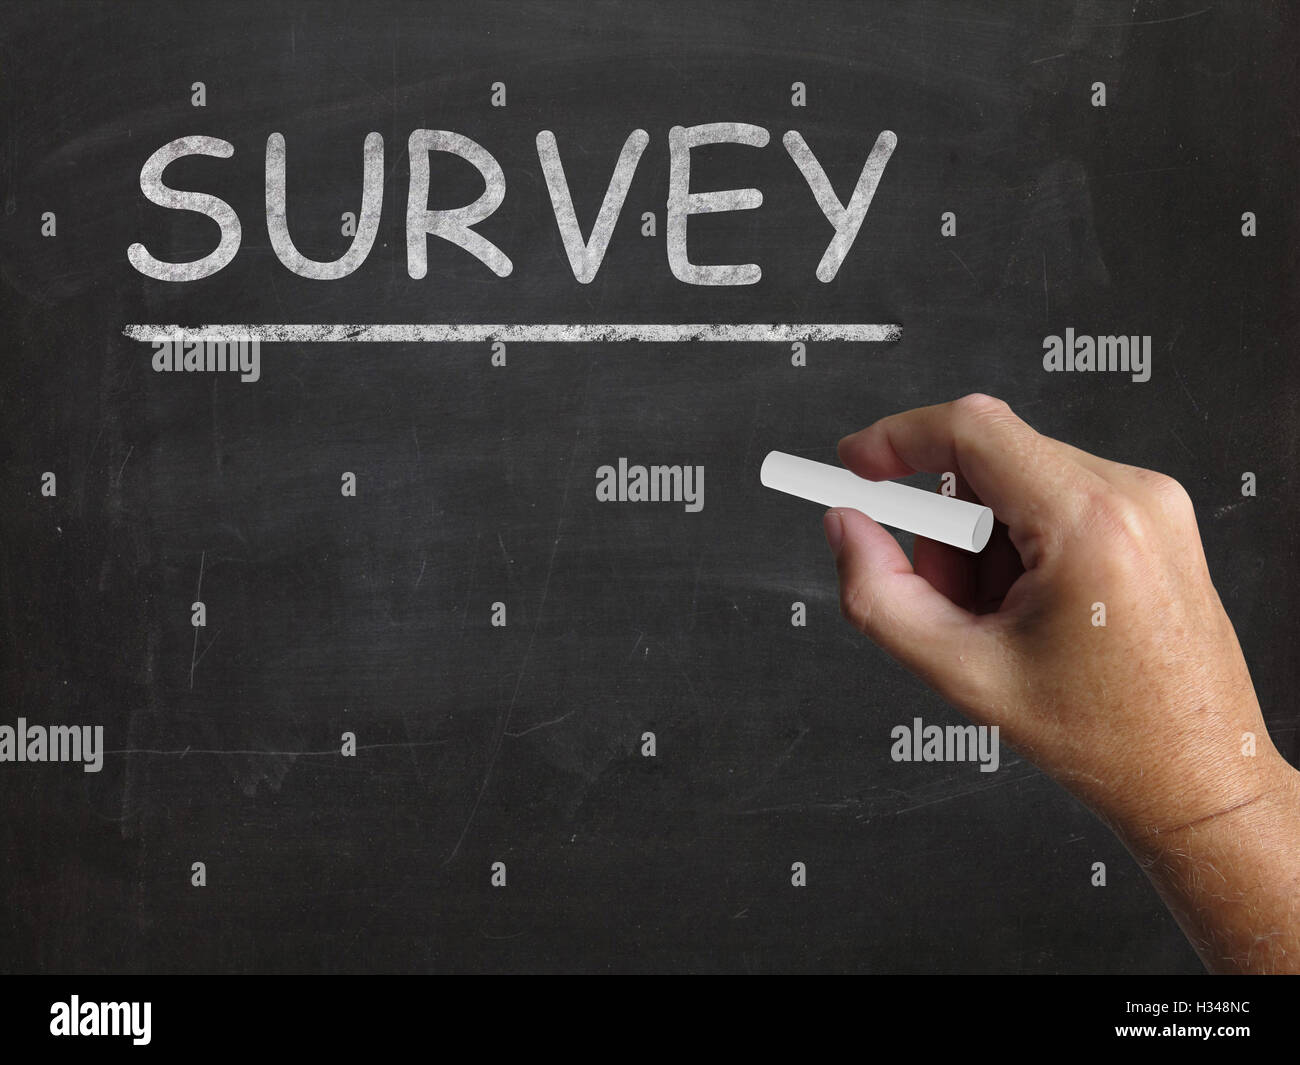 Survey Blackboard Shows Gathering Data From Sample Stock Photo